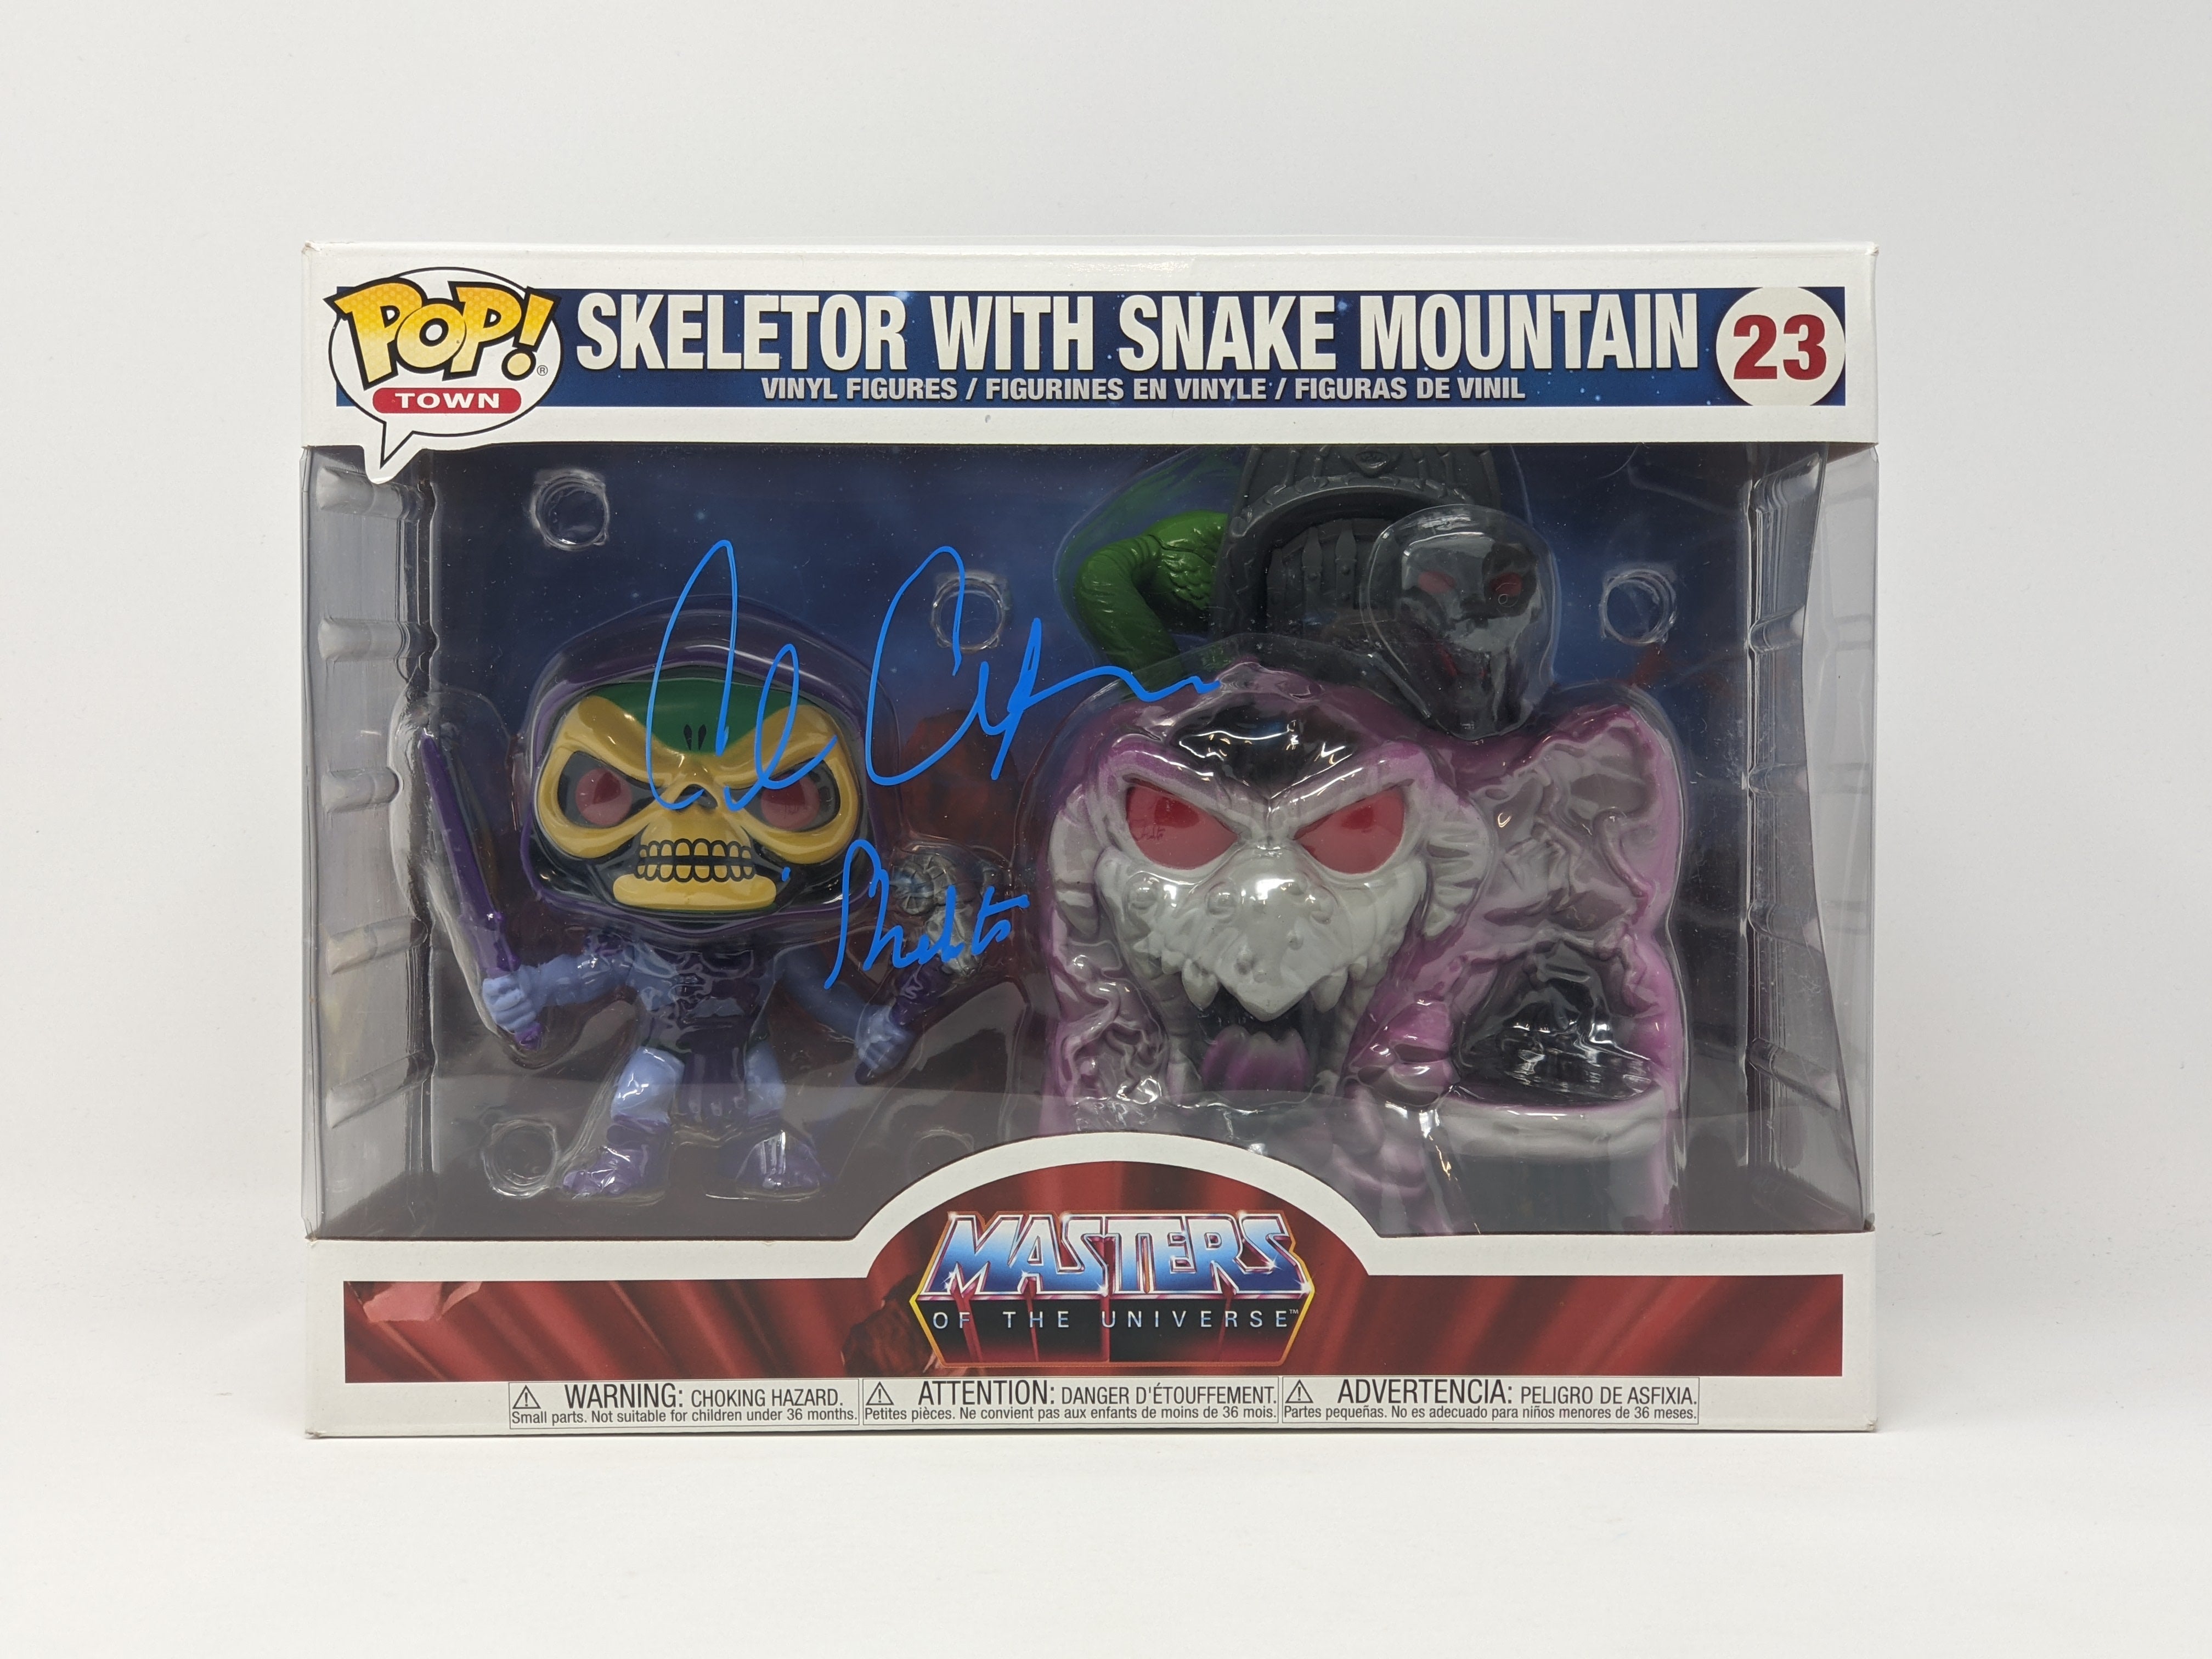 Alan Oppenheimer MOTU Skeletor with Snake Mountain #23 Signed Funko Pop Town JSA Certified Autograph